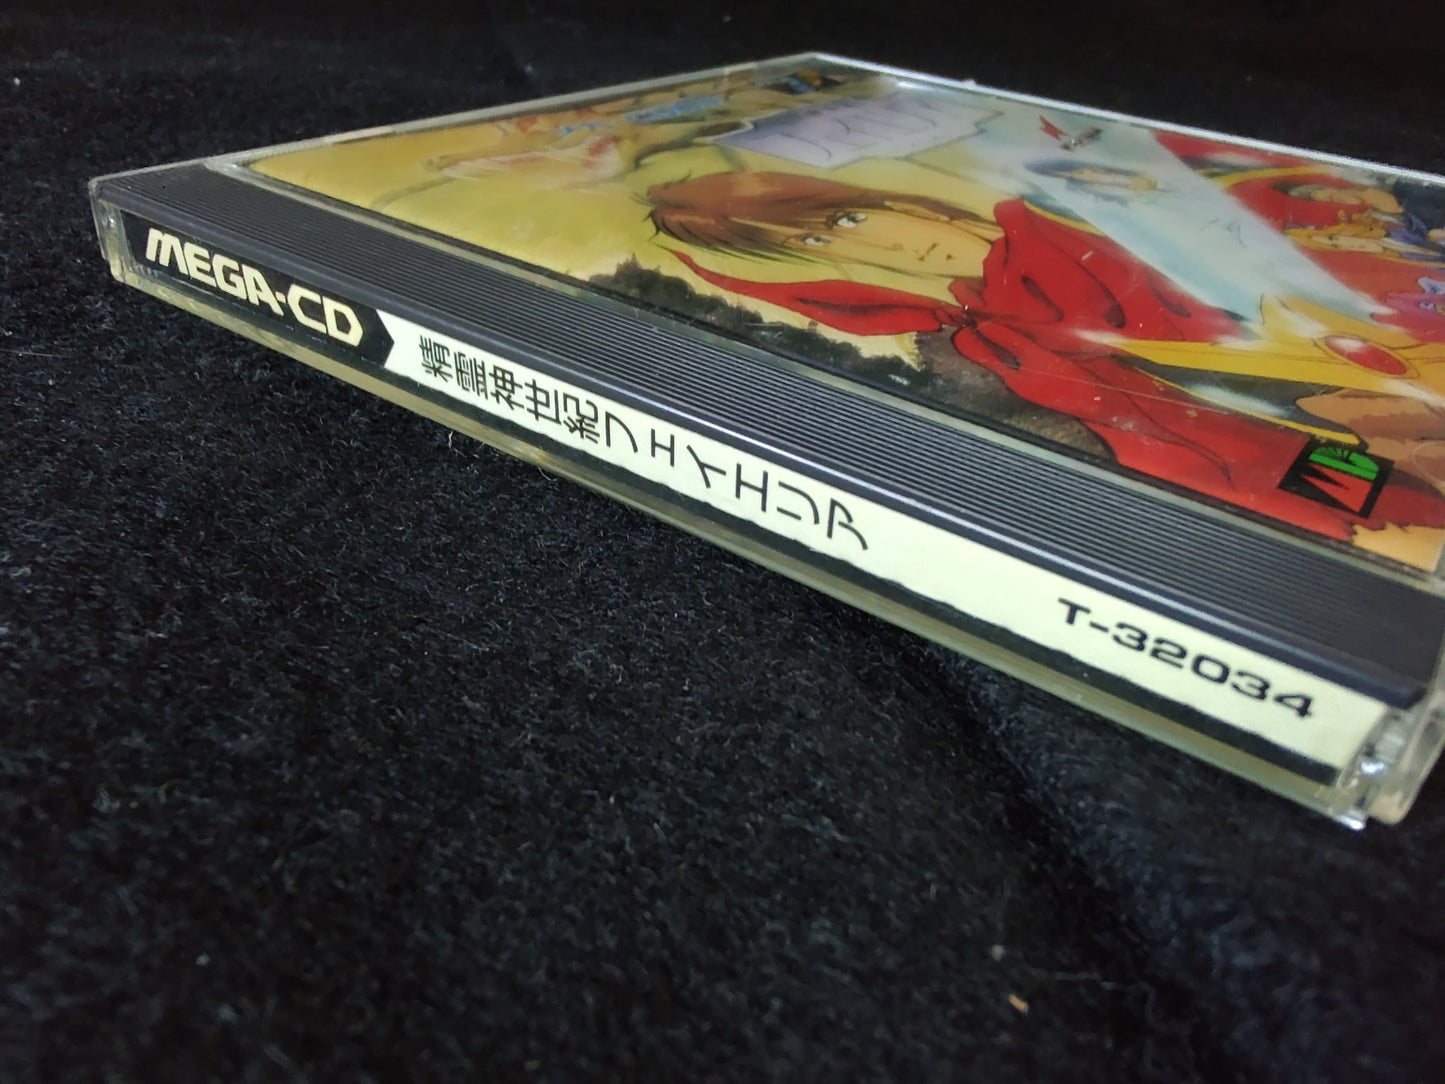 FHEY AREA MEGA CD shooter game Disk, Manual, Box set, Working-f0925-